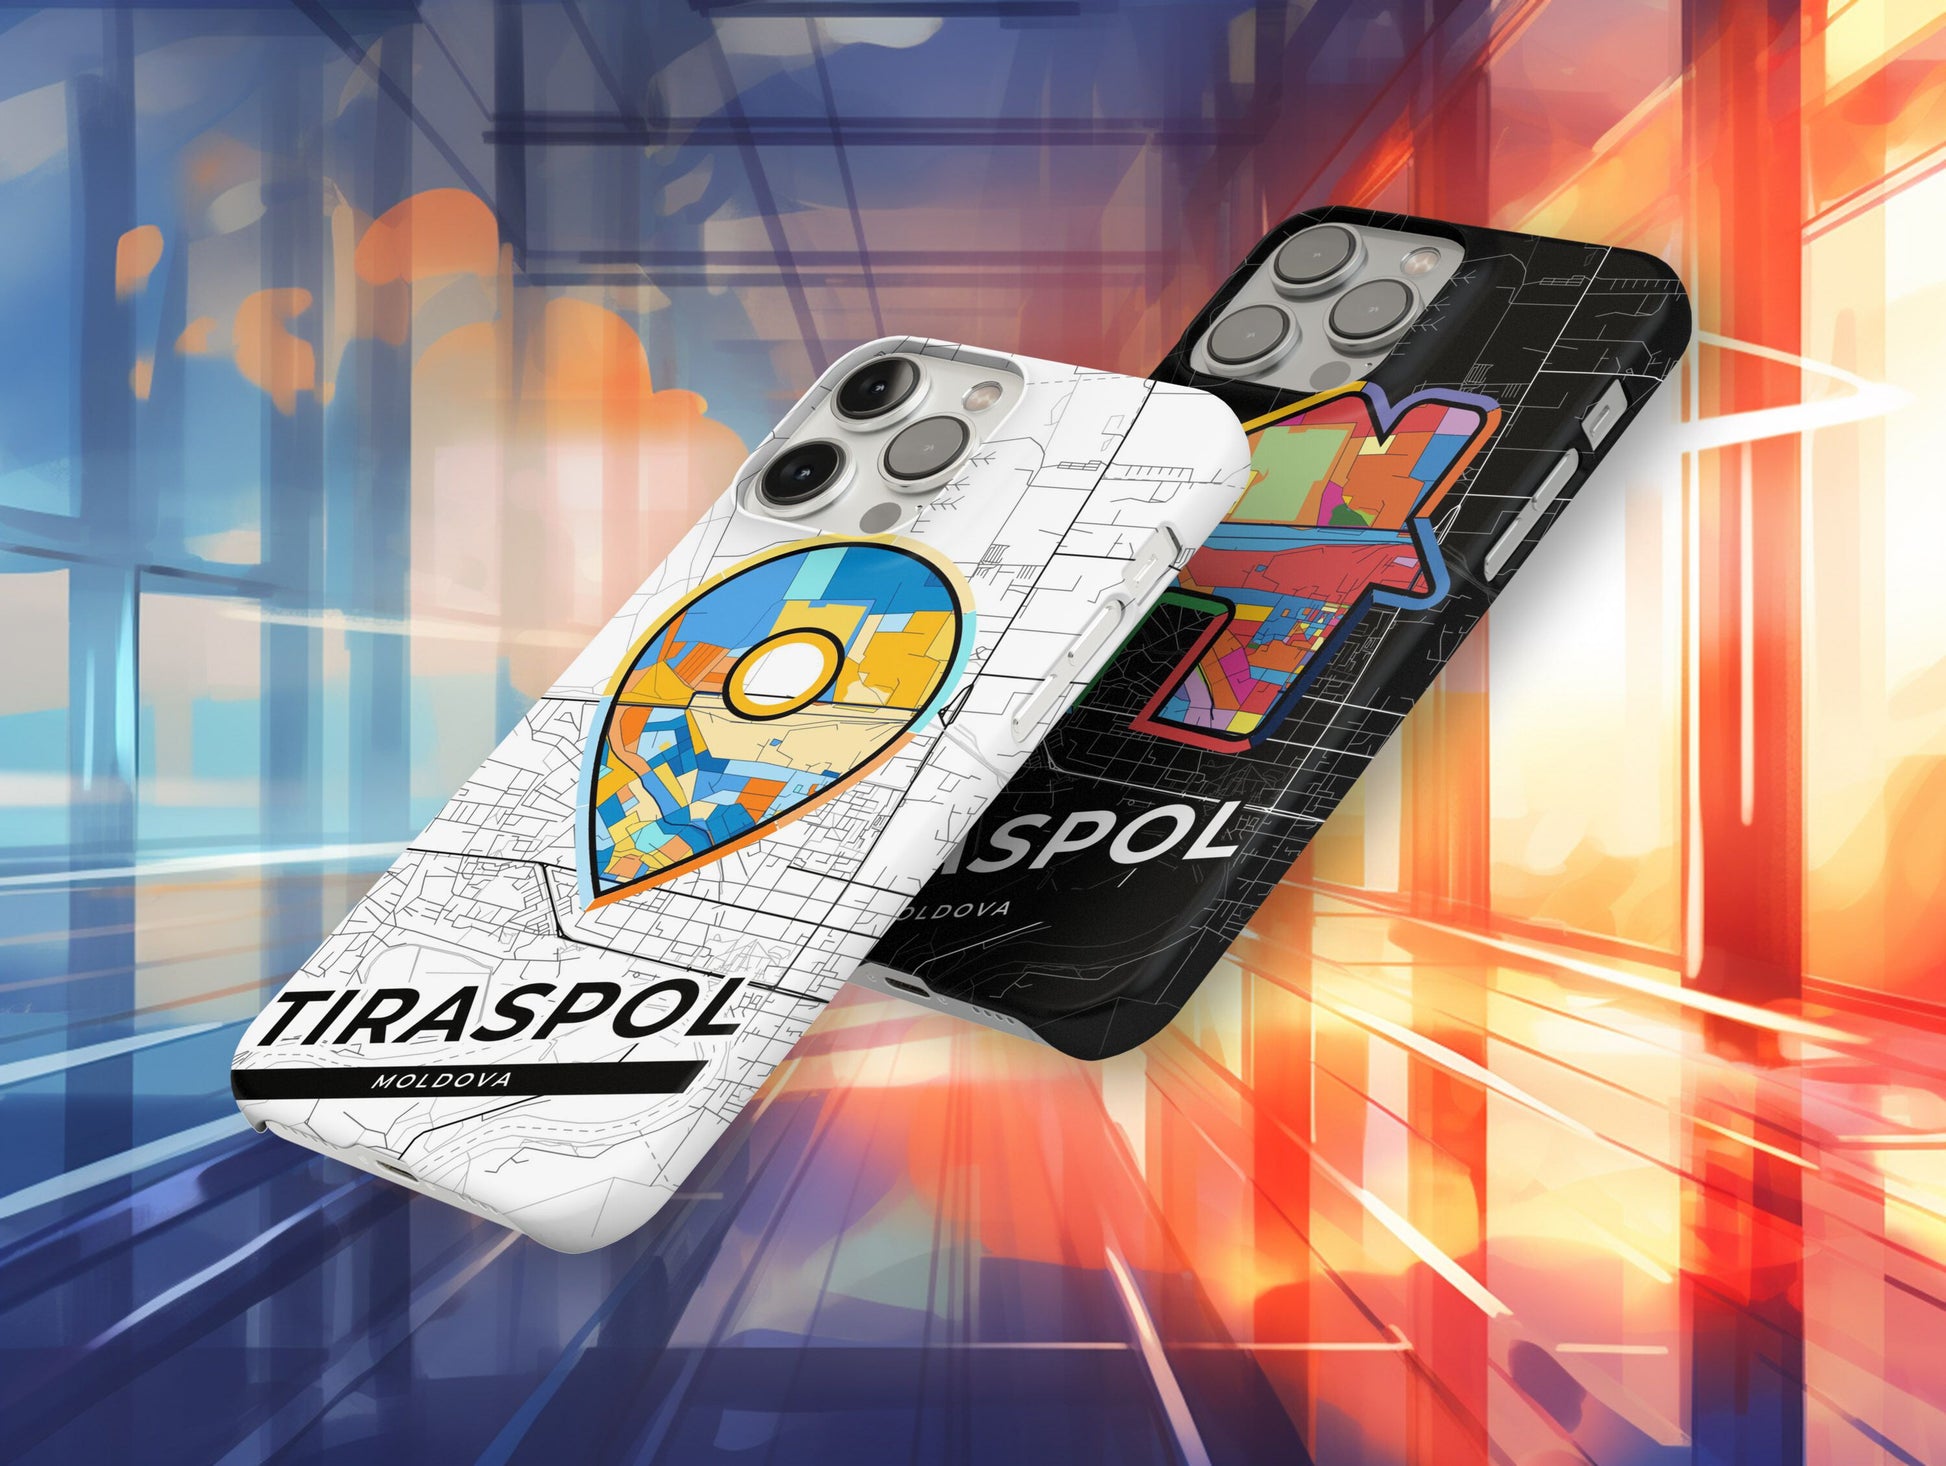 Tiraspol Moldova slim phone case with colorful icon